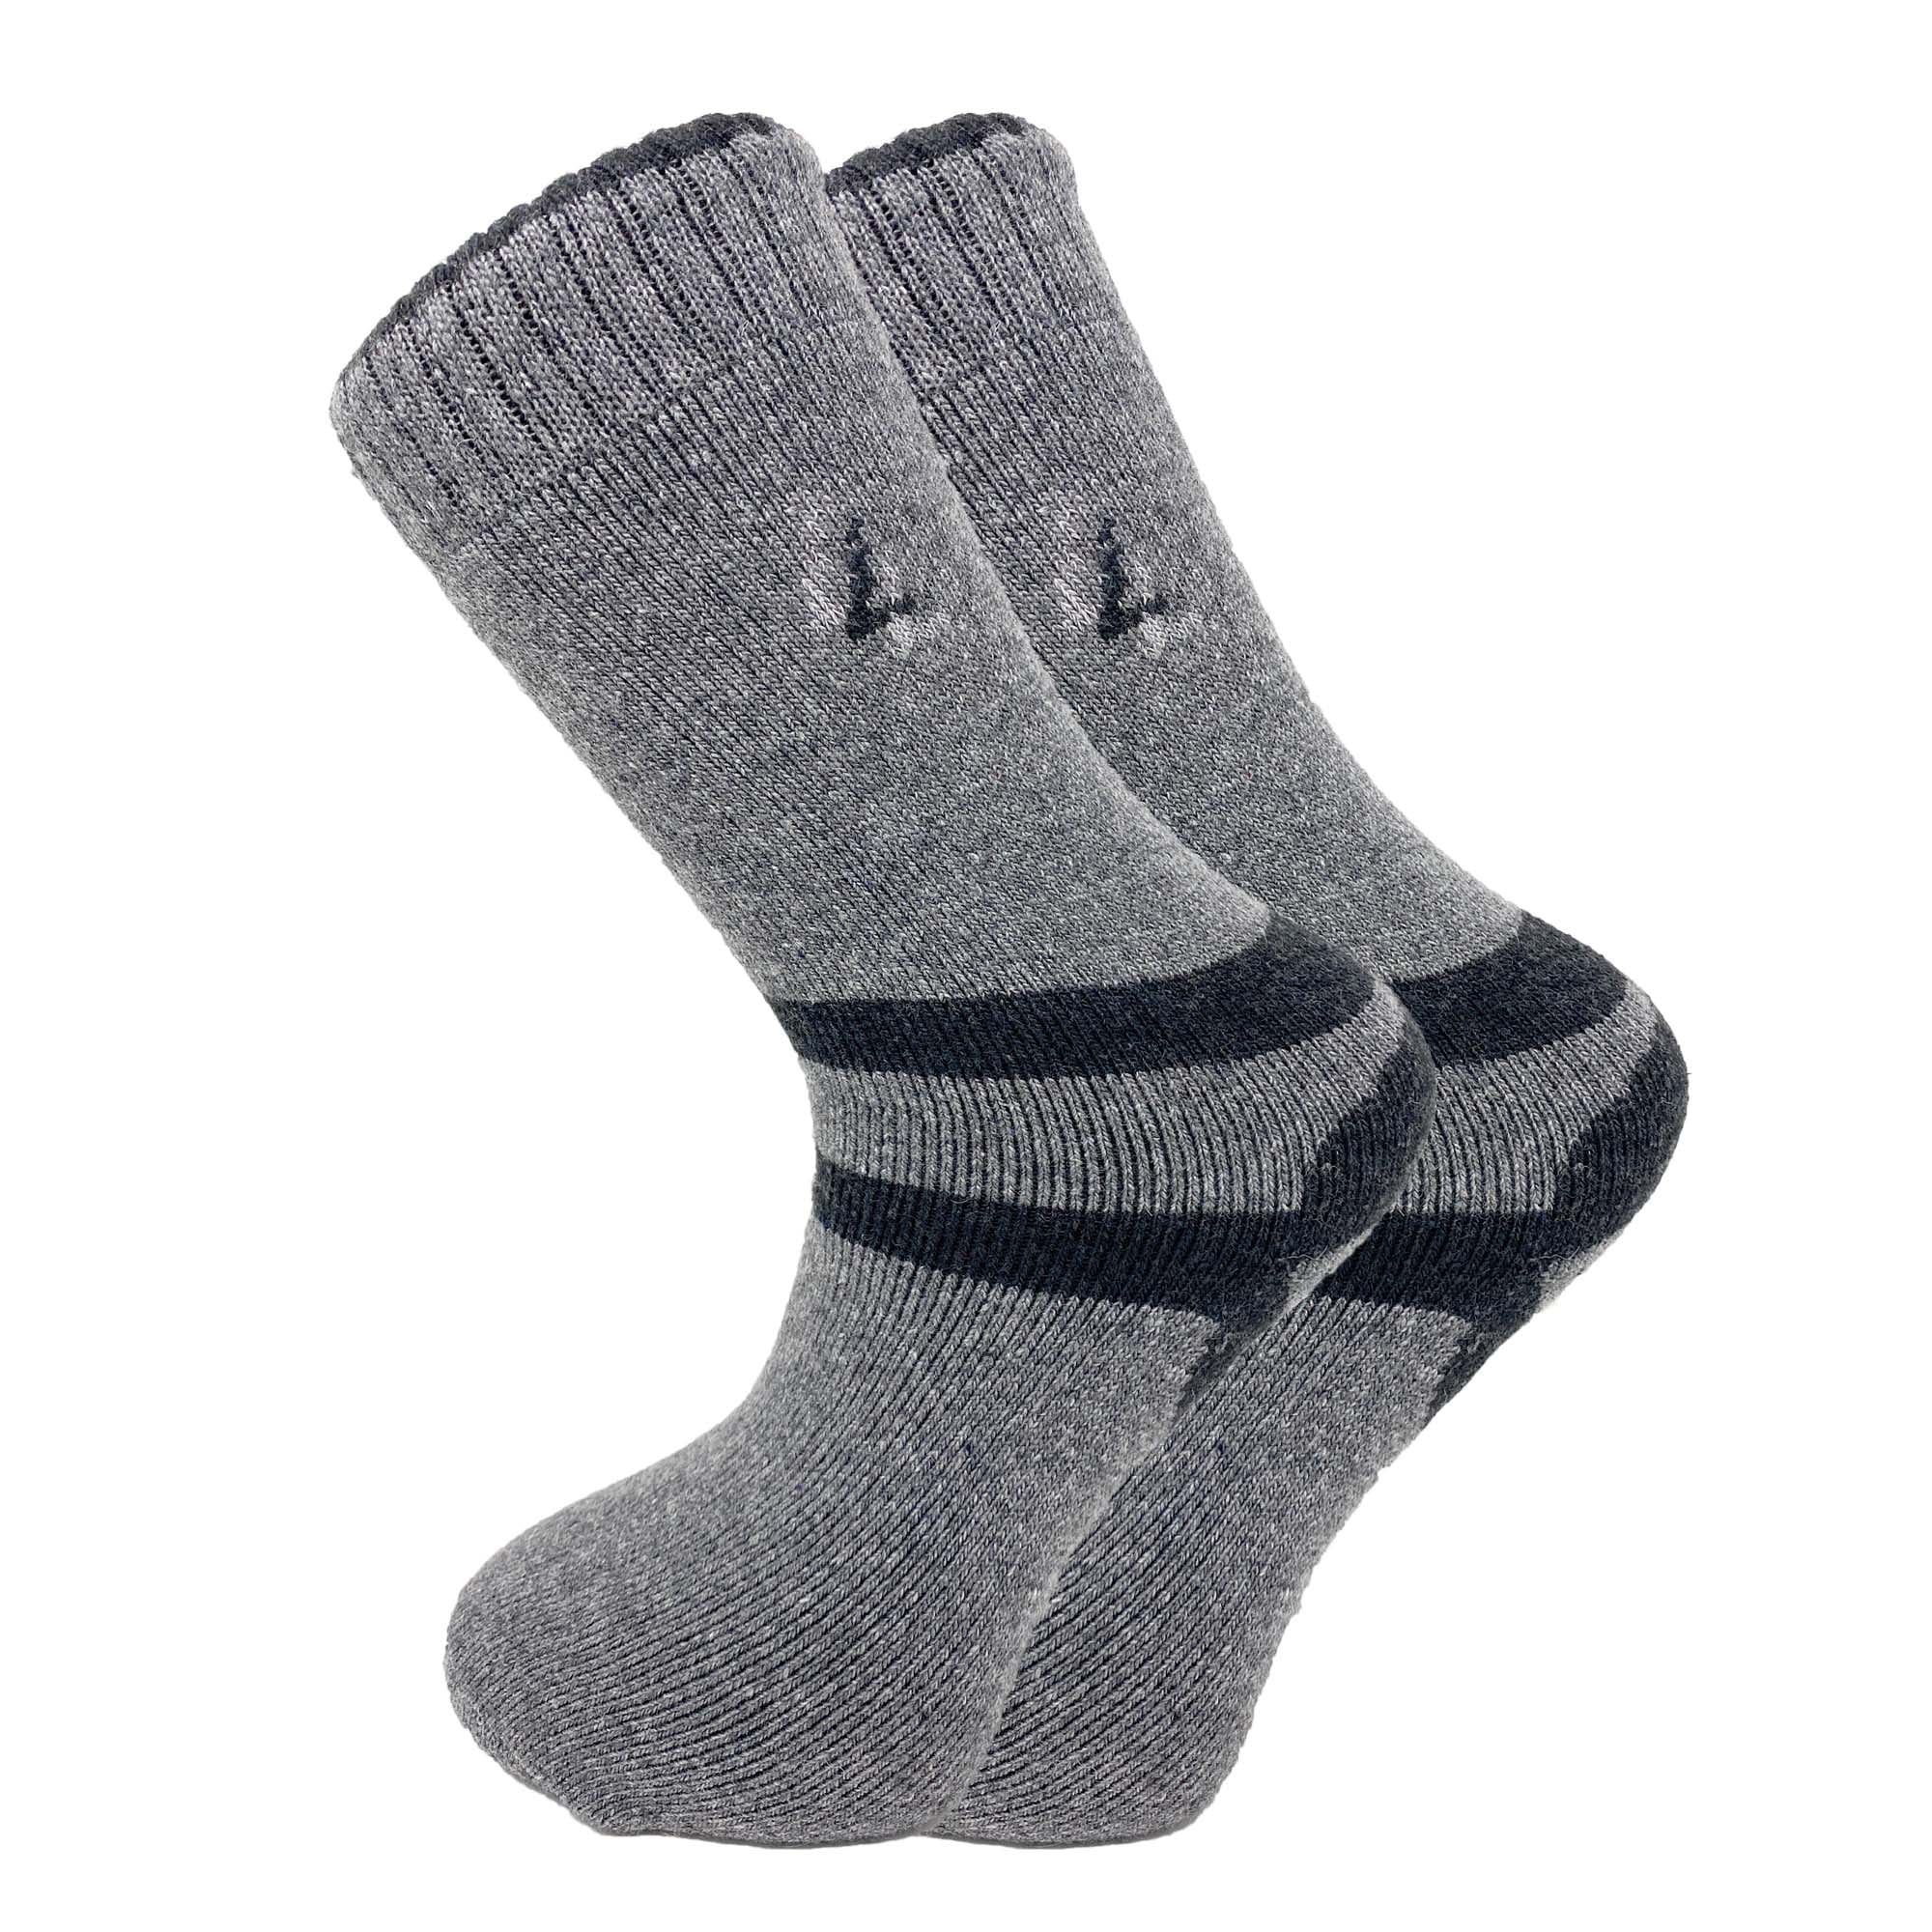 3 Pairs For Mens Heavy Duty Merino Lambs Wool Winter Thermal Socks Size 10-13 